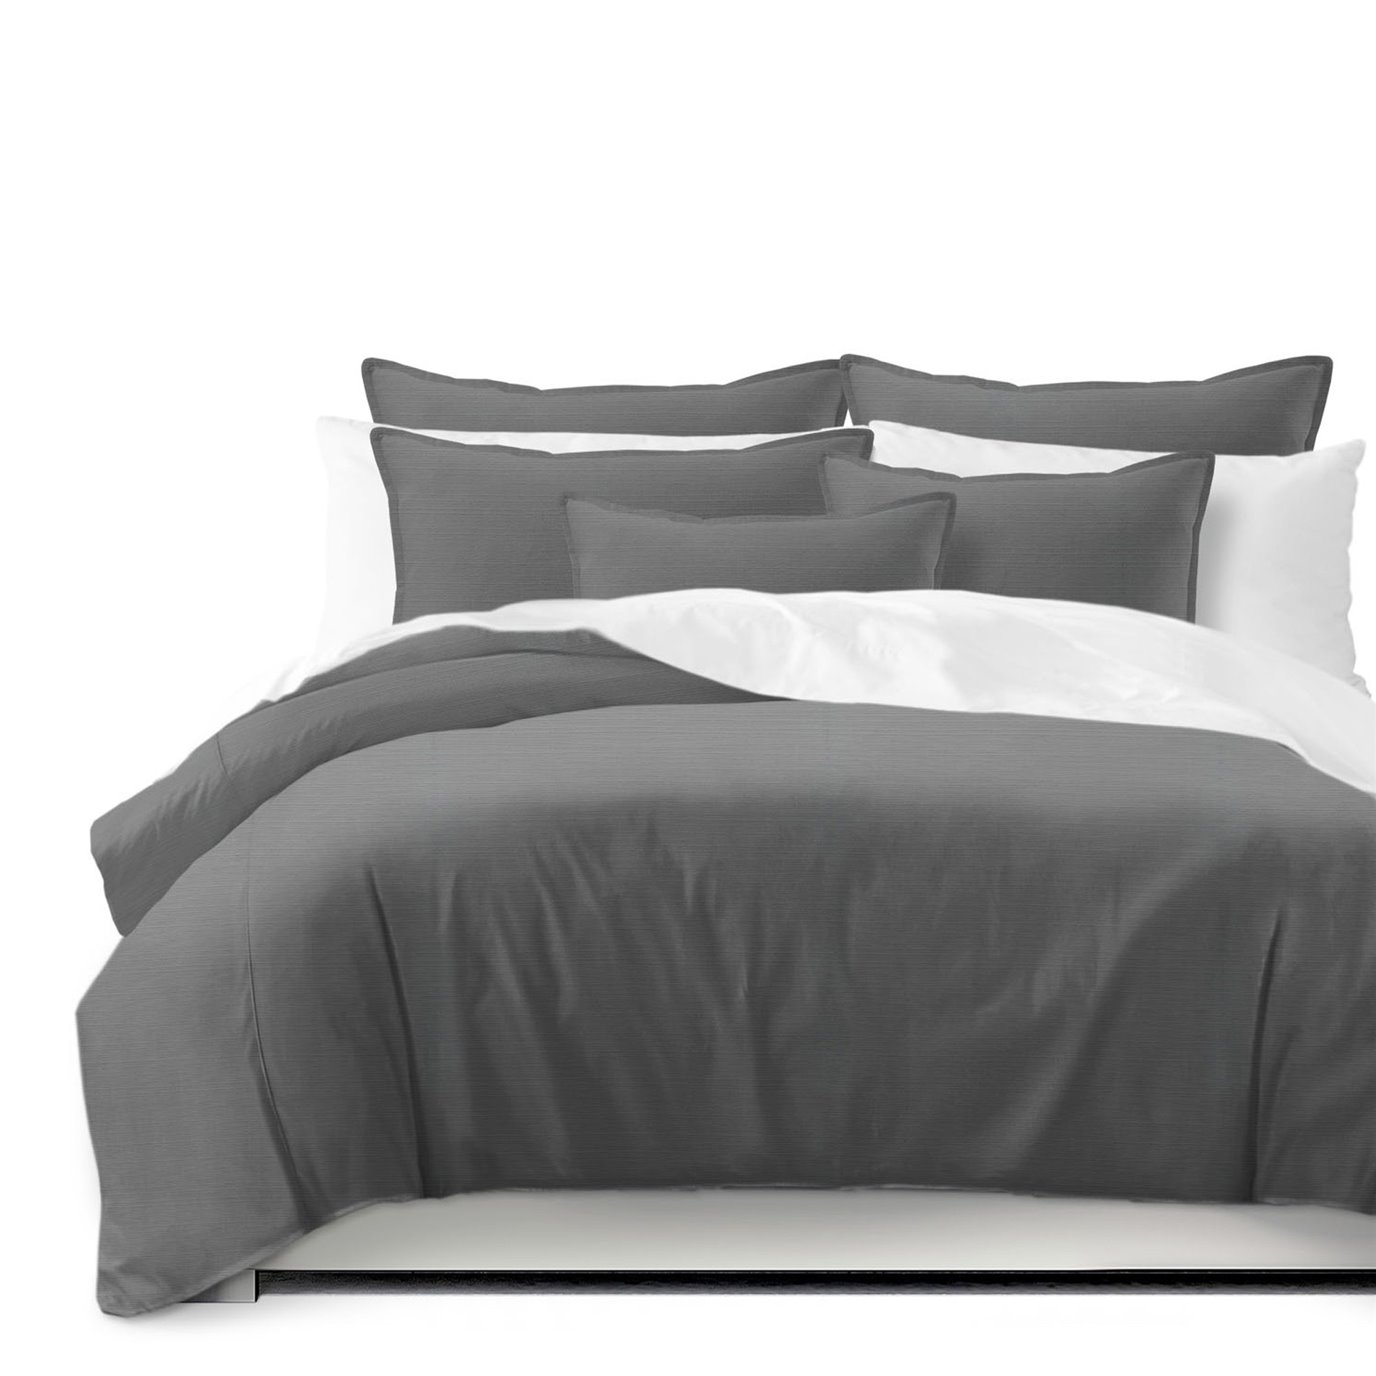 Nova Charcoal Comforter and Pillow Sham(s) Set - Size King / California King